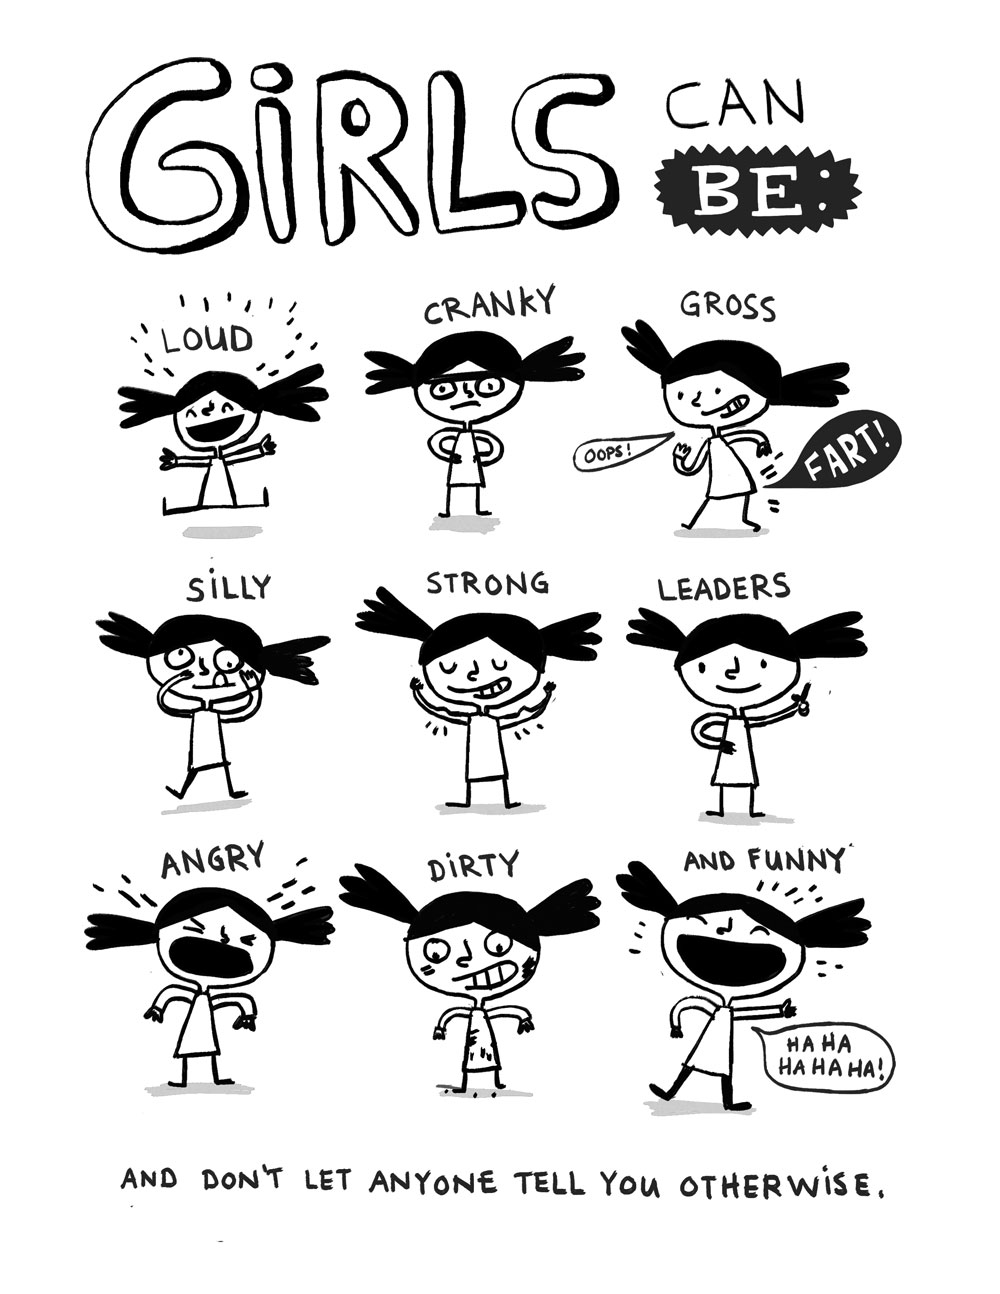 Elise Gravel 'Girls Can Be' Poster